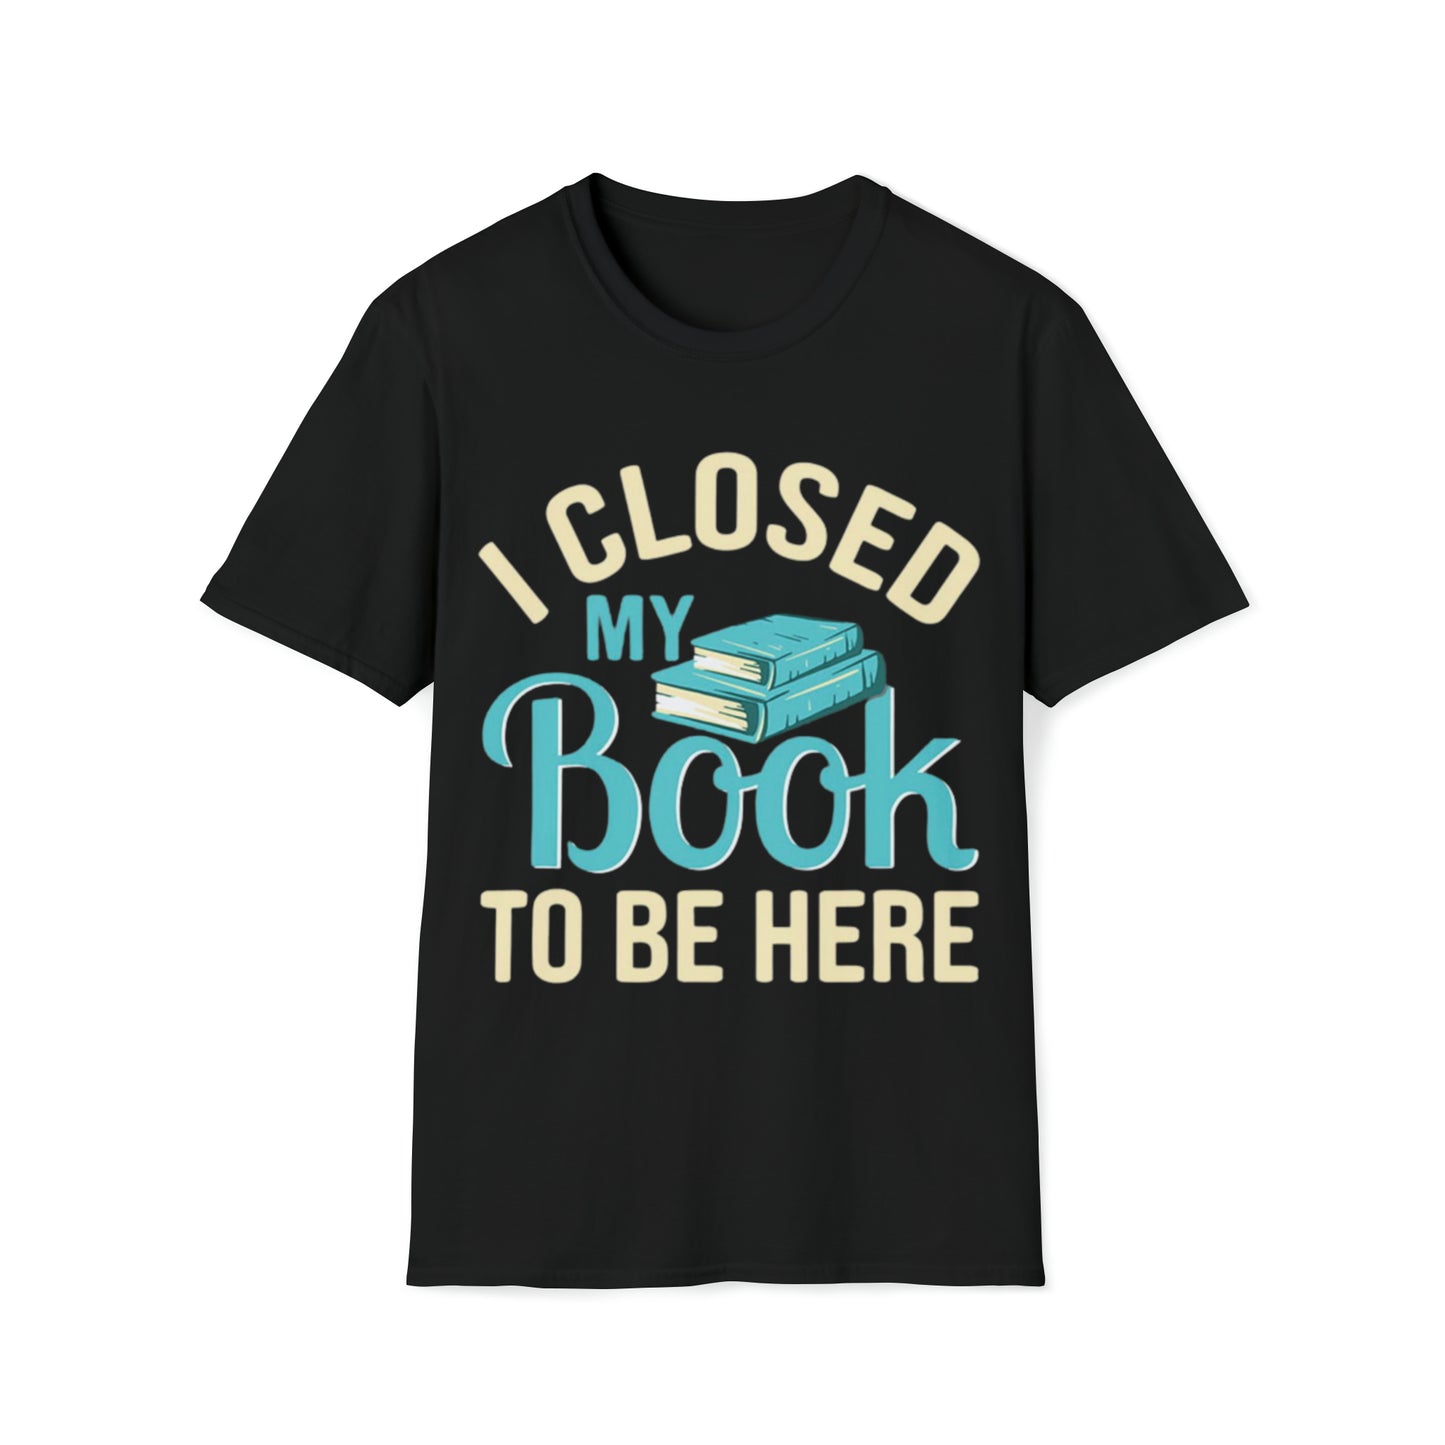 I closed my book - Unisex Softstyle T-Shirt